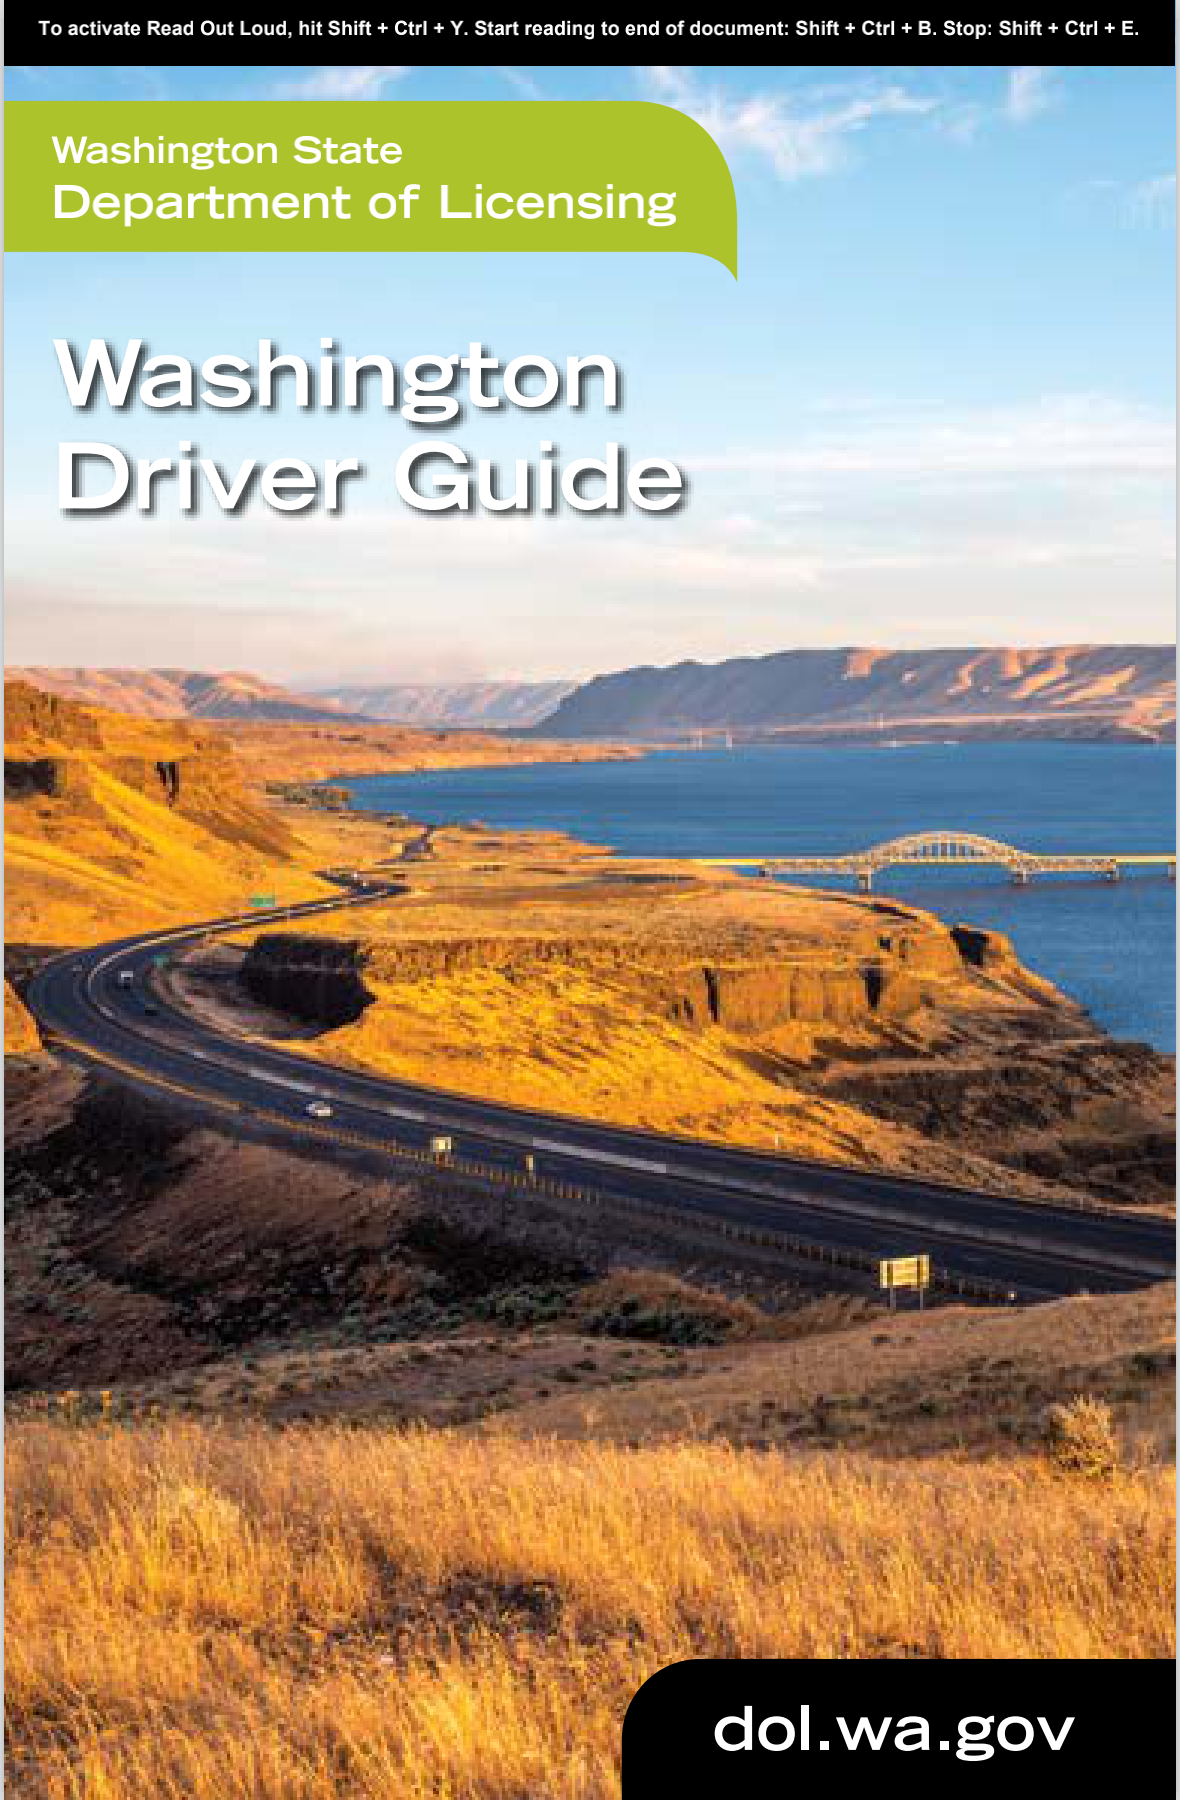 Washington Driver's Handbook